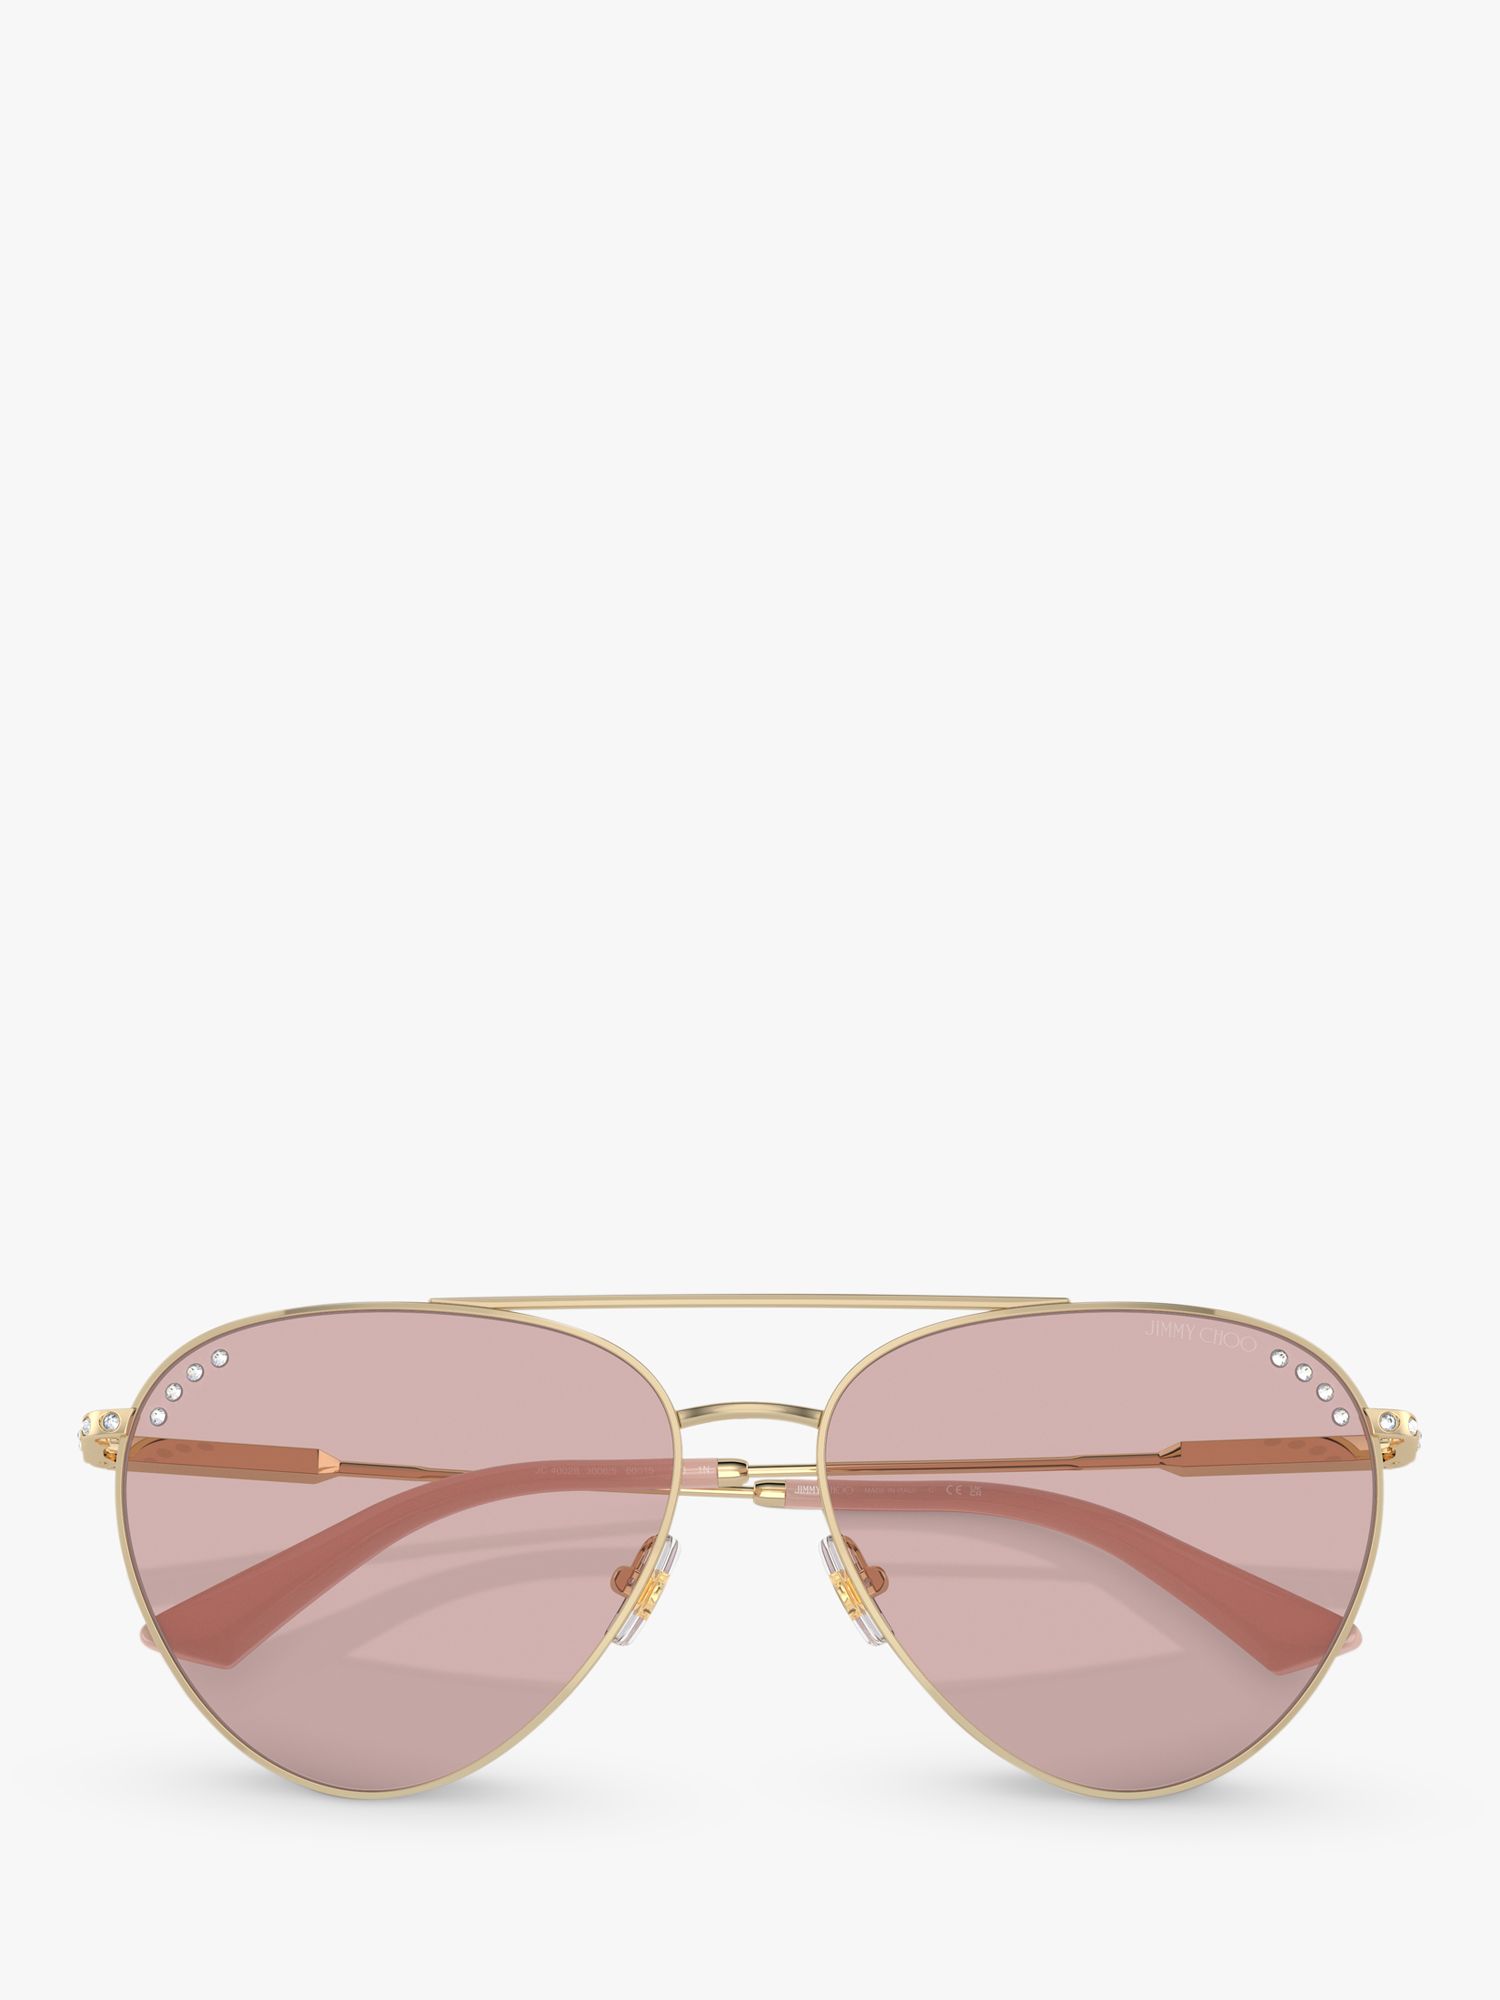 Jimmy Choo JC4002B Women's Aviator Sunglasses, Pale Gold/Pink